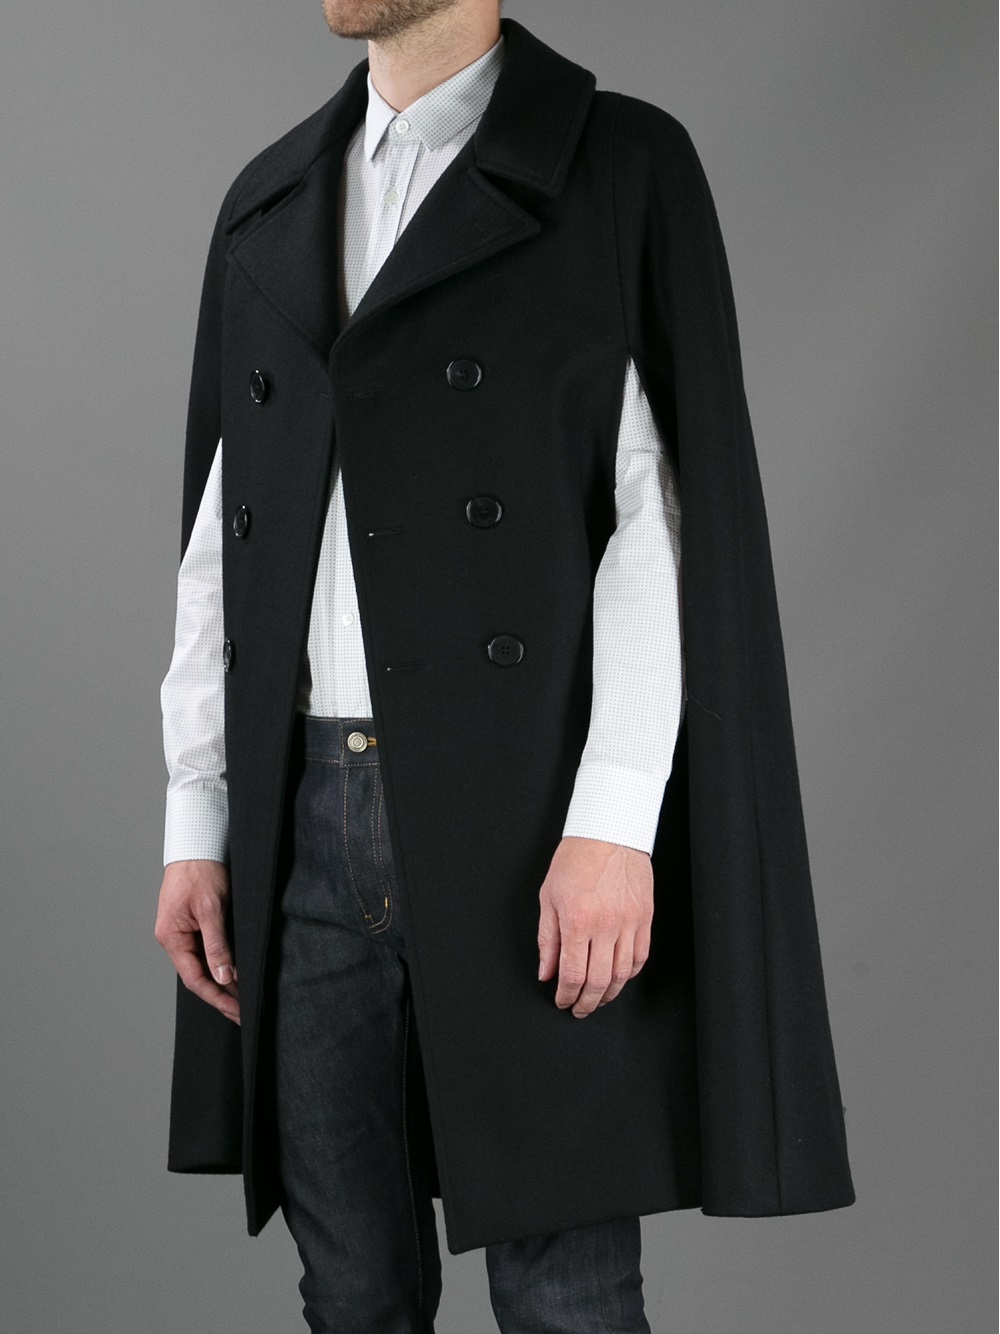 Lyst - Saint Laurent Double Breasted Cape Coat in Black for Men